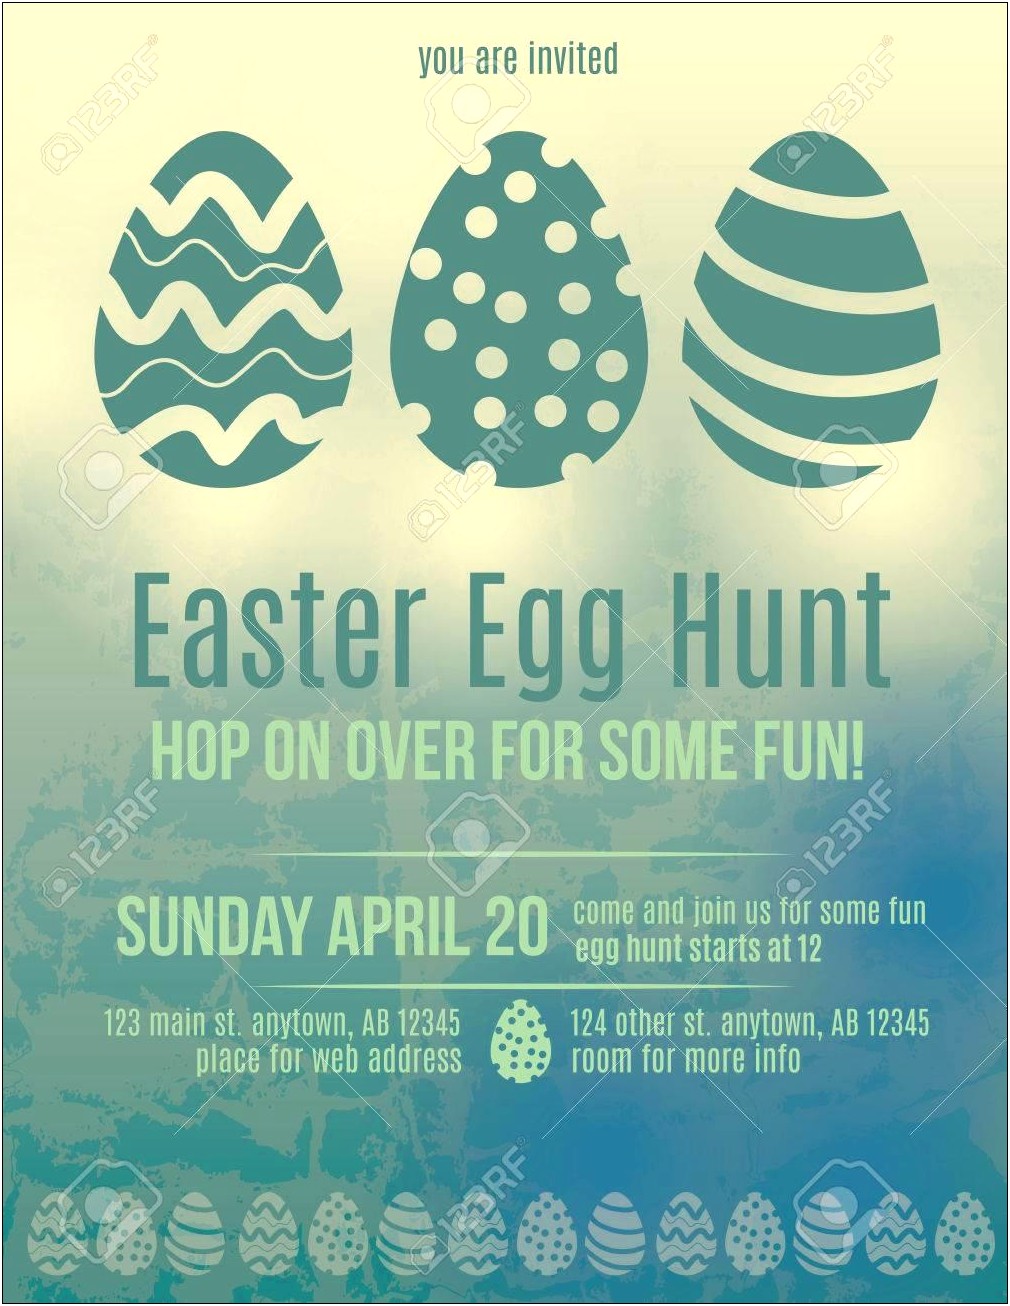 Easter Egg Hunt Flyer Free Template